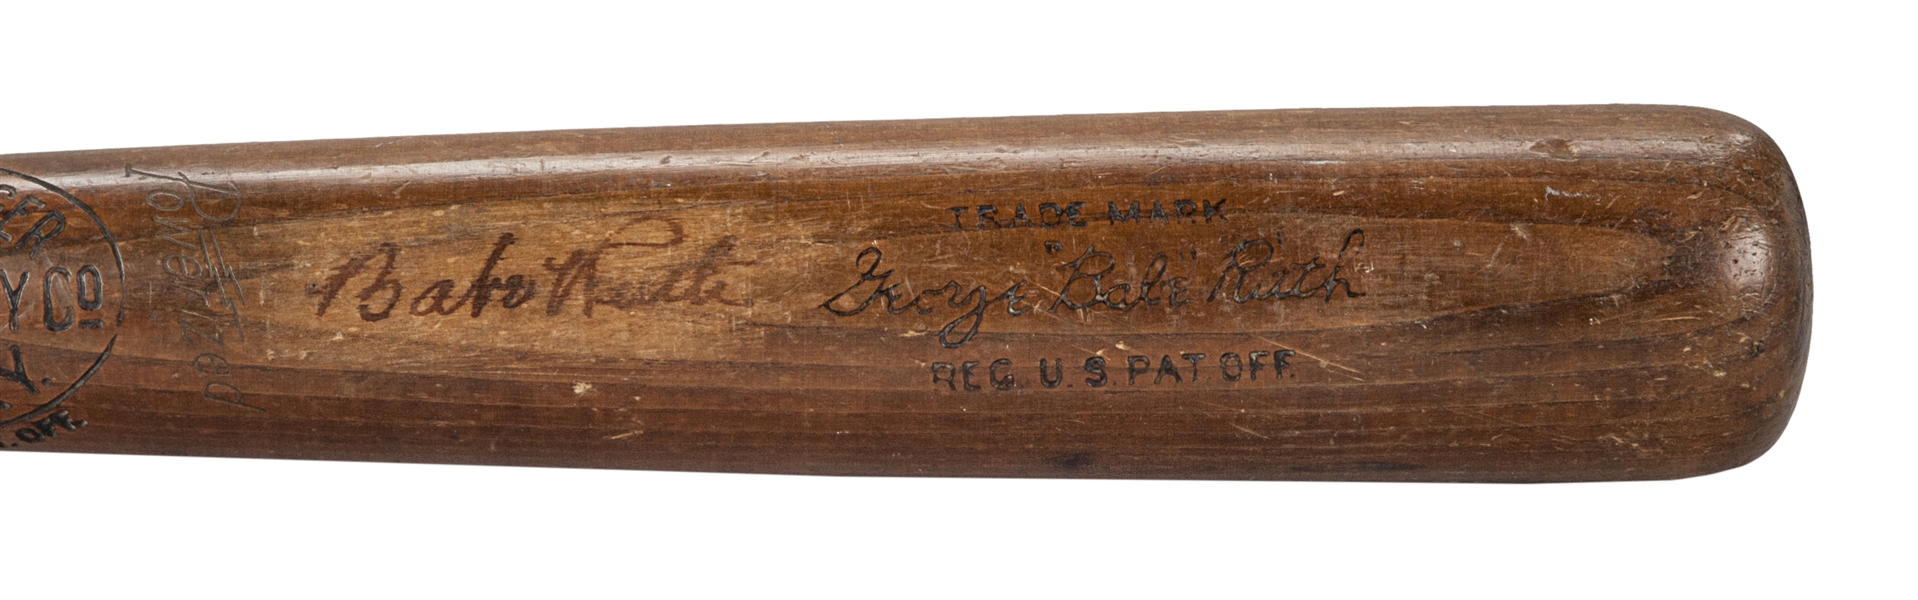 Babe Ruth Game Used Bat